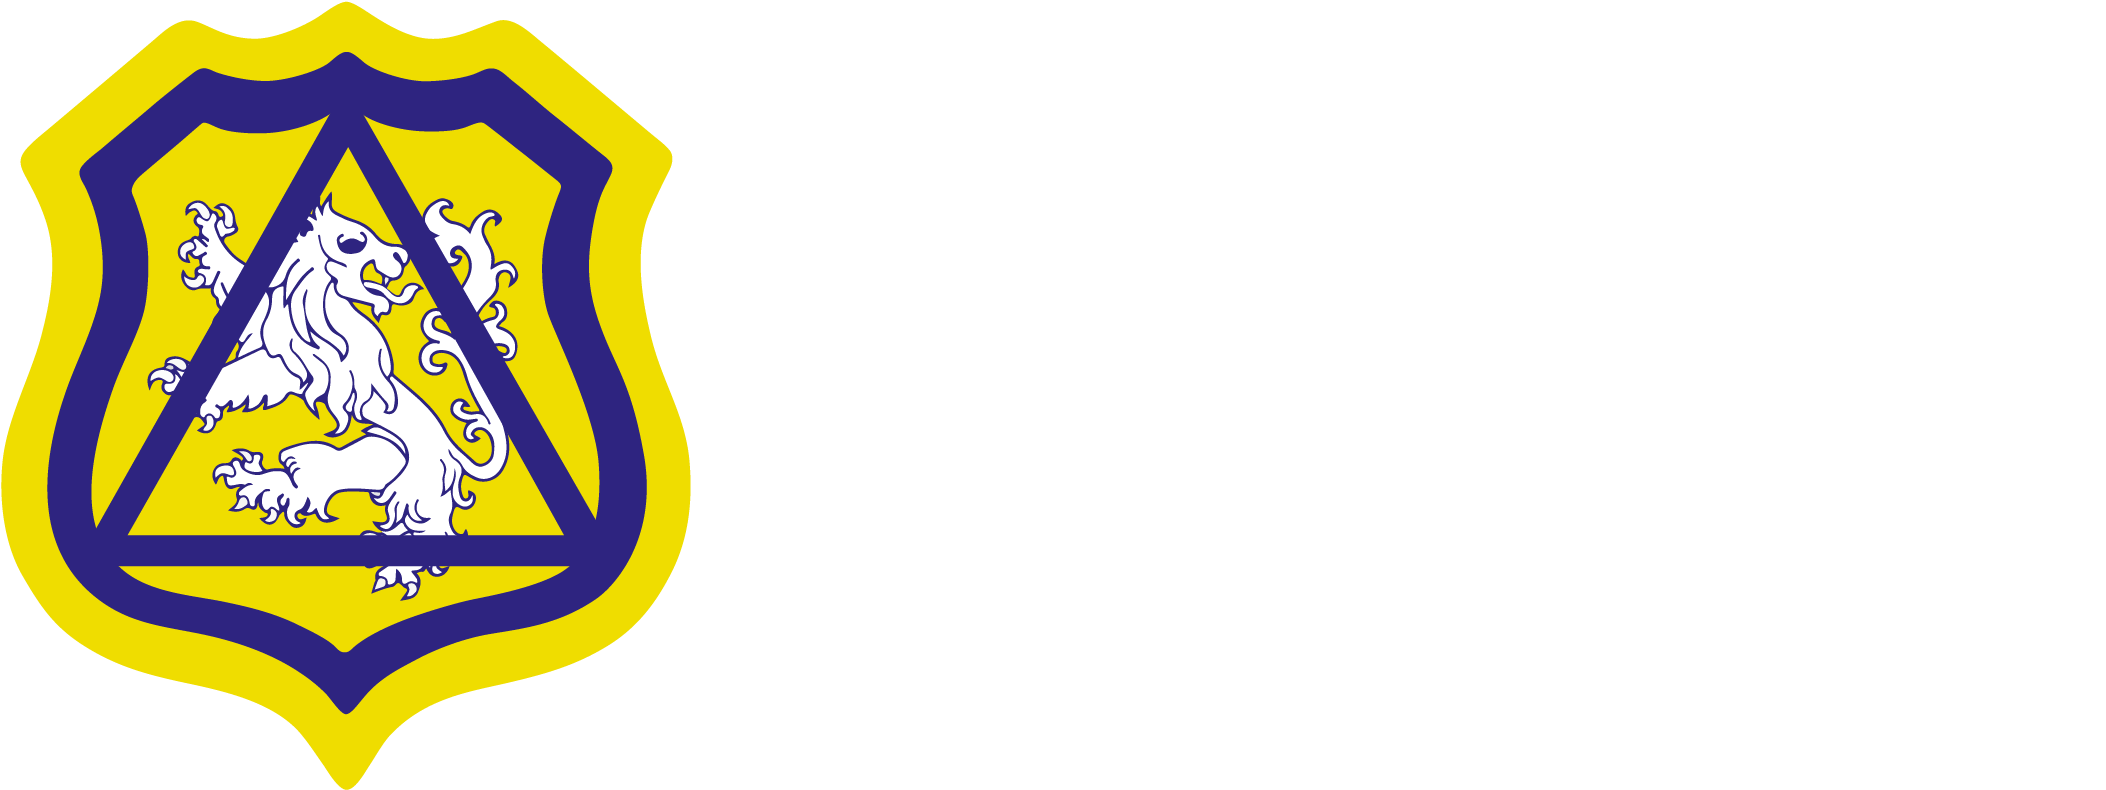 Holy Trinity Sloane Square Cofe Primary School - Holy Trinity Sloane Square School Logo (2136x802)